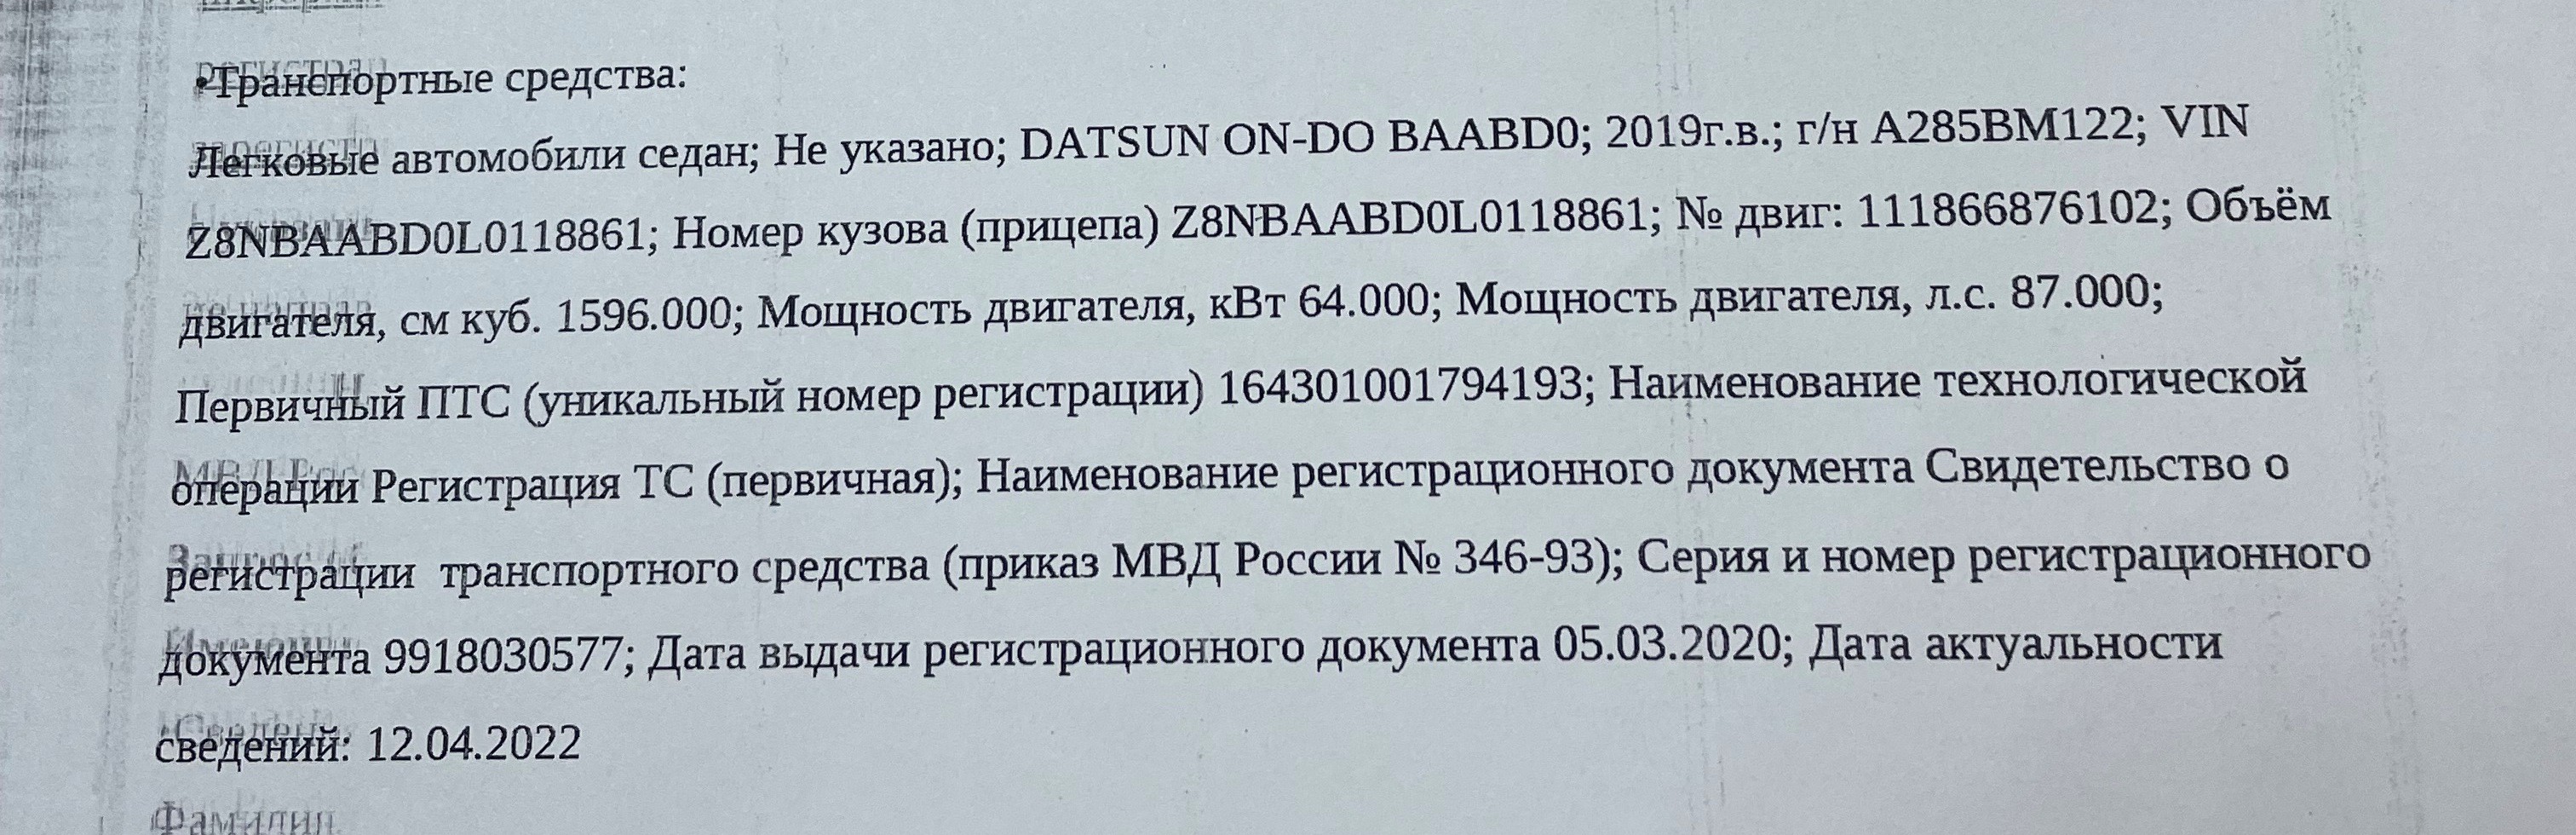 Автомобиль DATSUN ON-DO, 2019 г.в., гос. рег. знак А285ВМ122, VIN Z8NBAABD0L0118861. Начальная цена 